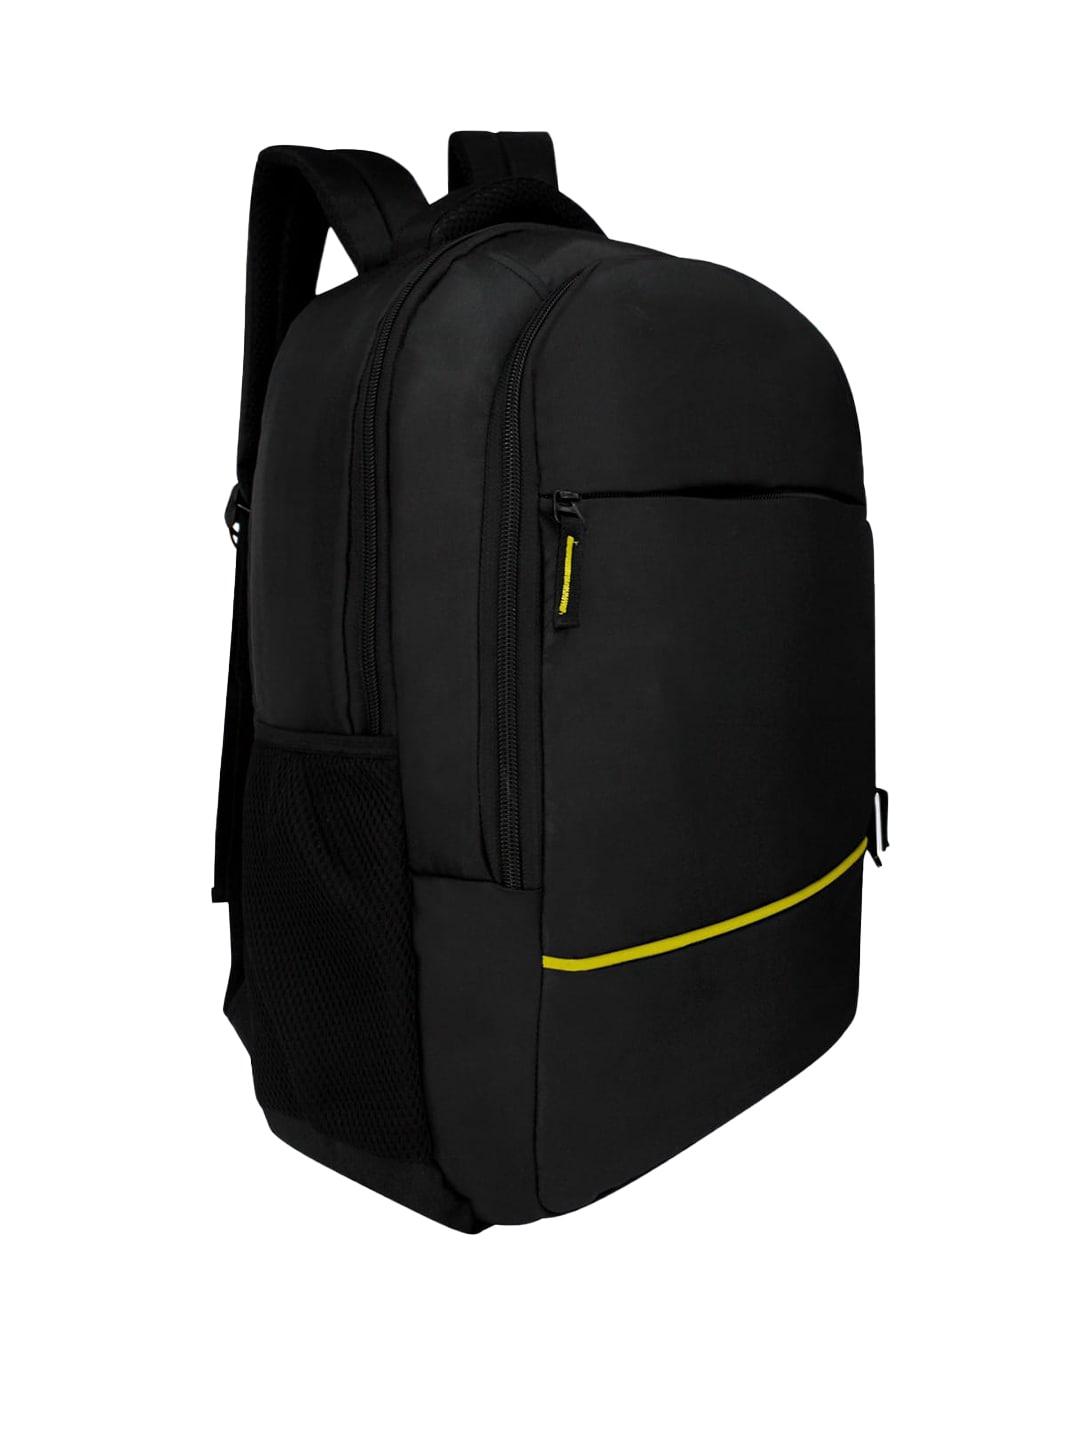 LOOKMUSTER Unisex Yellow & Black Light Weight Laptop Bag